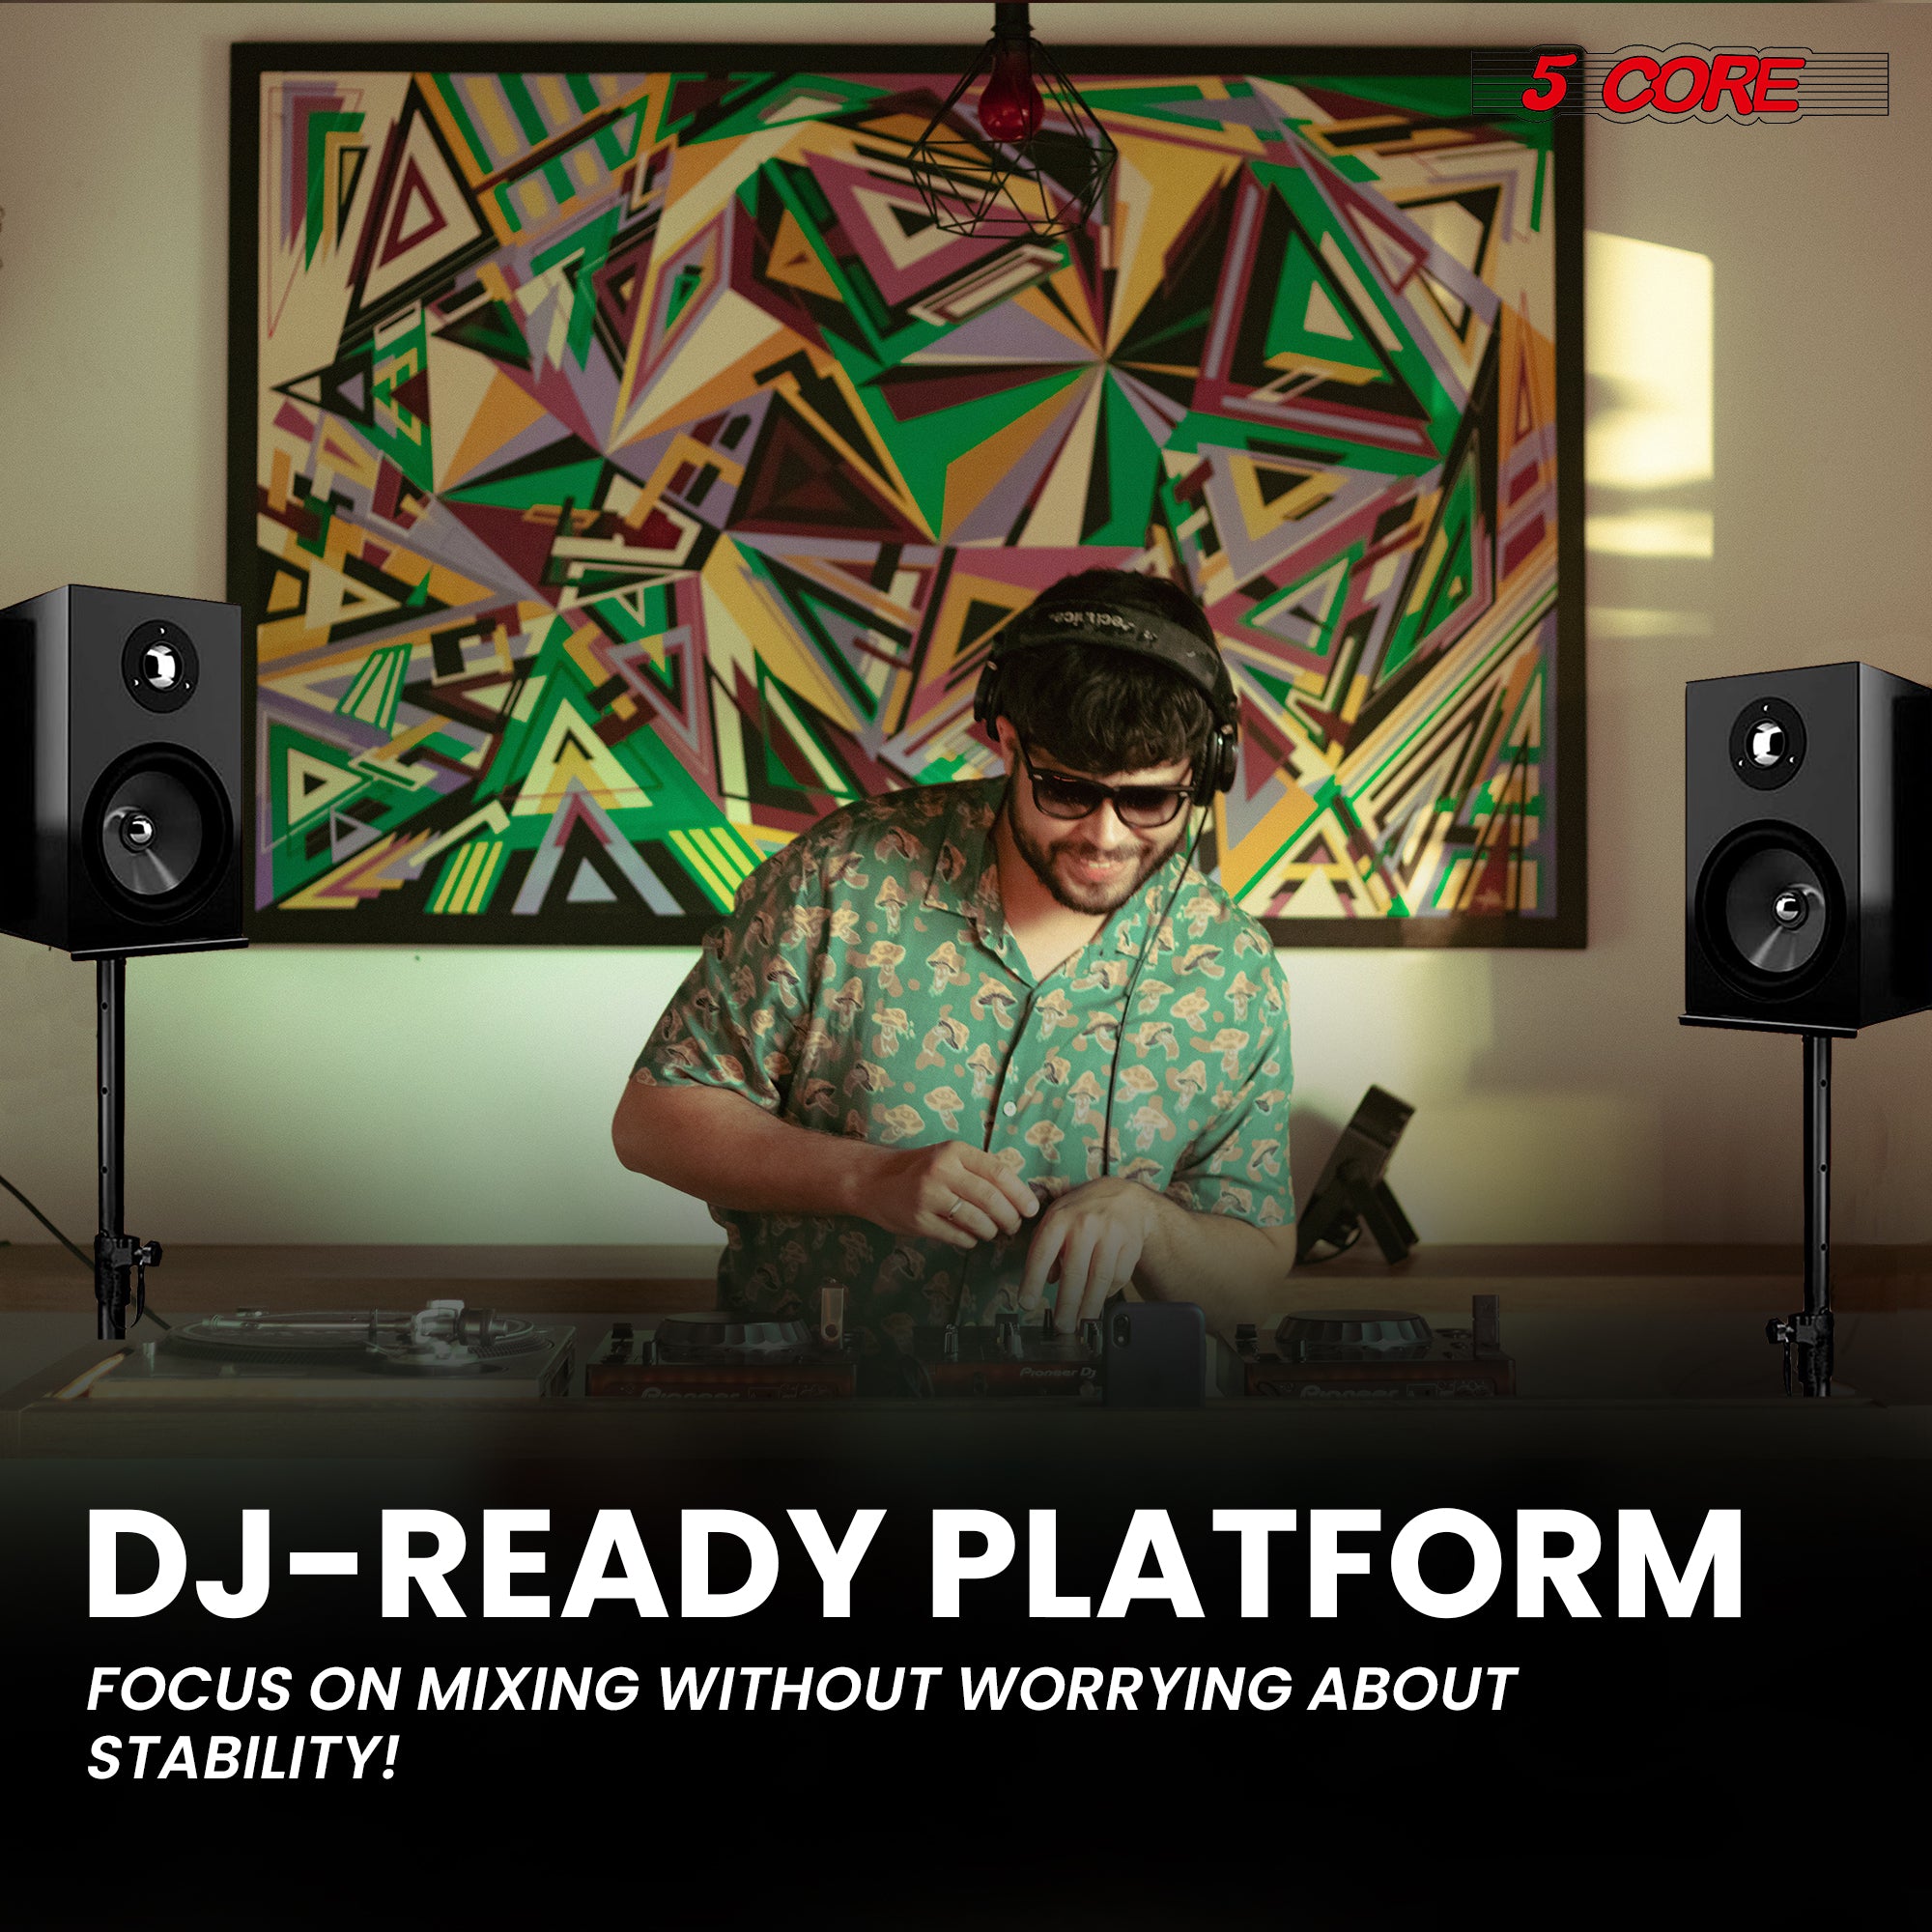 dj-ready platform